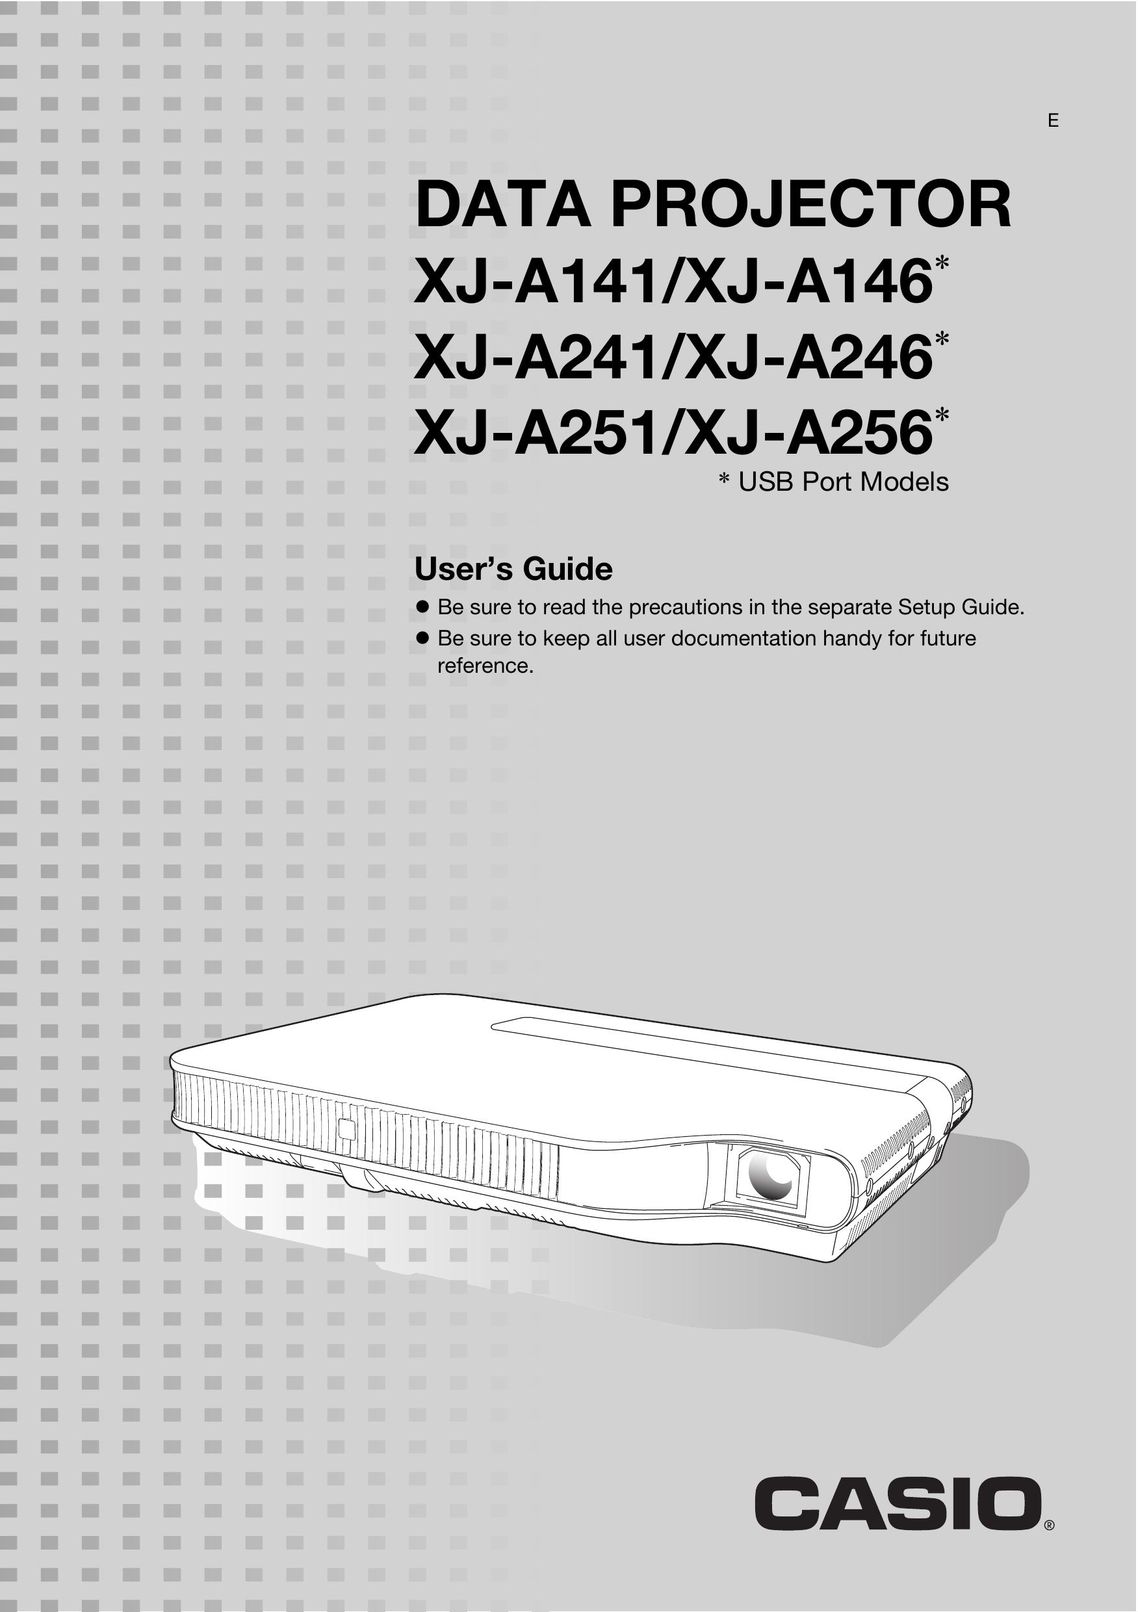 Casio XJ-A246* Projector User Manual